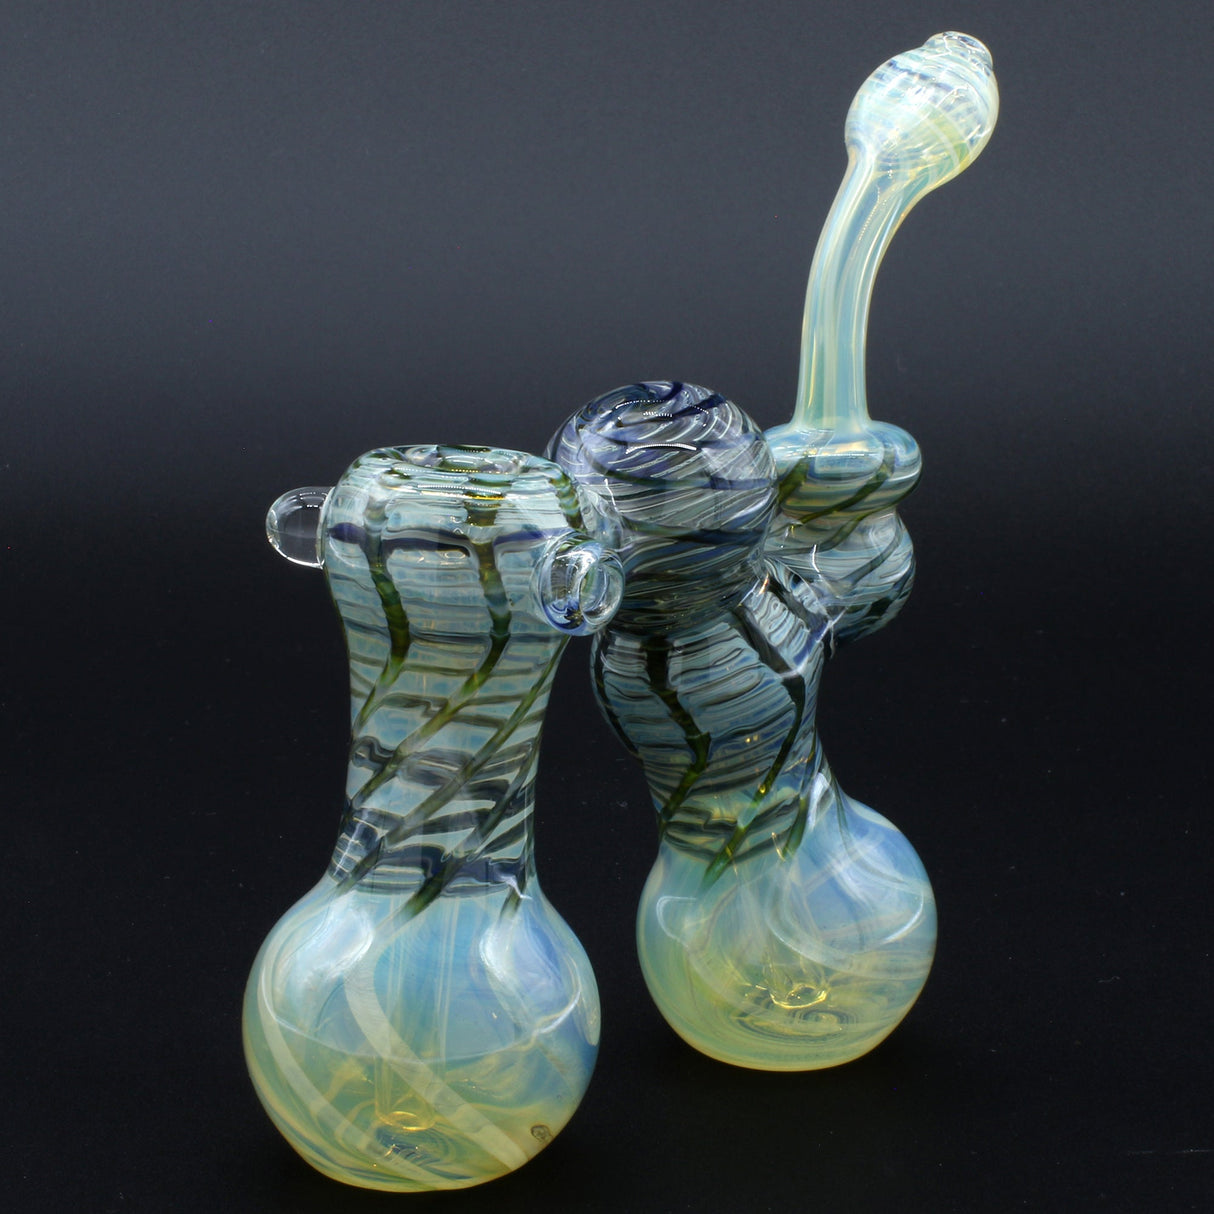 Clayball Glass "Dub-Bubb" Sherlock Double Bubbler with Heady Swirl Design, Borosilicate Glass, USA